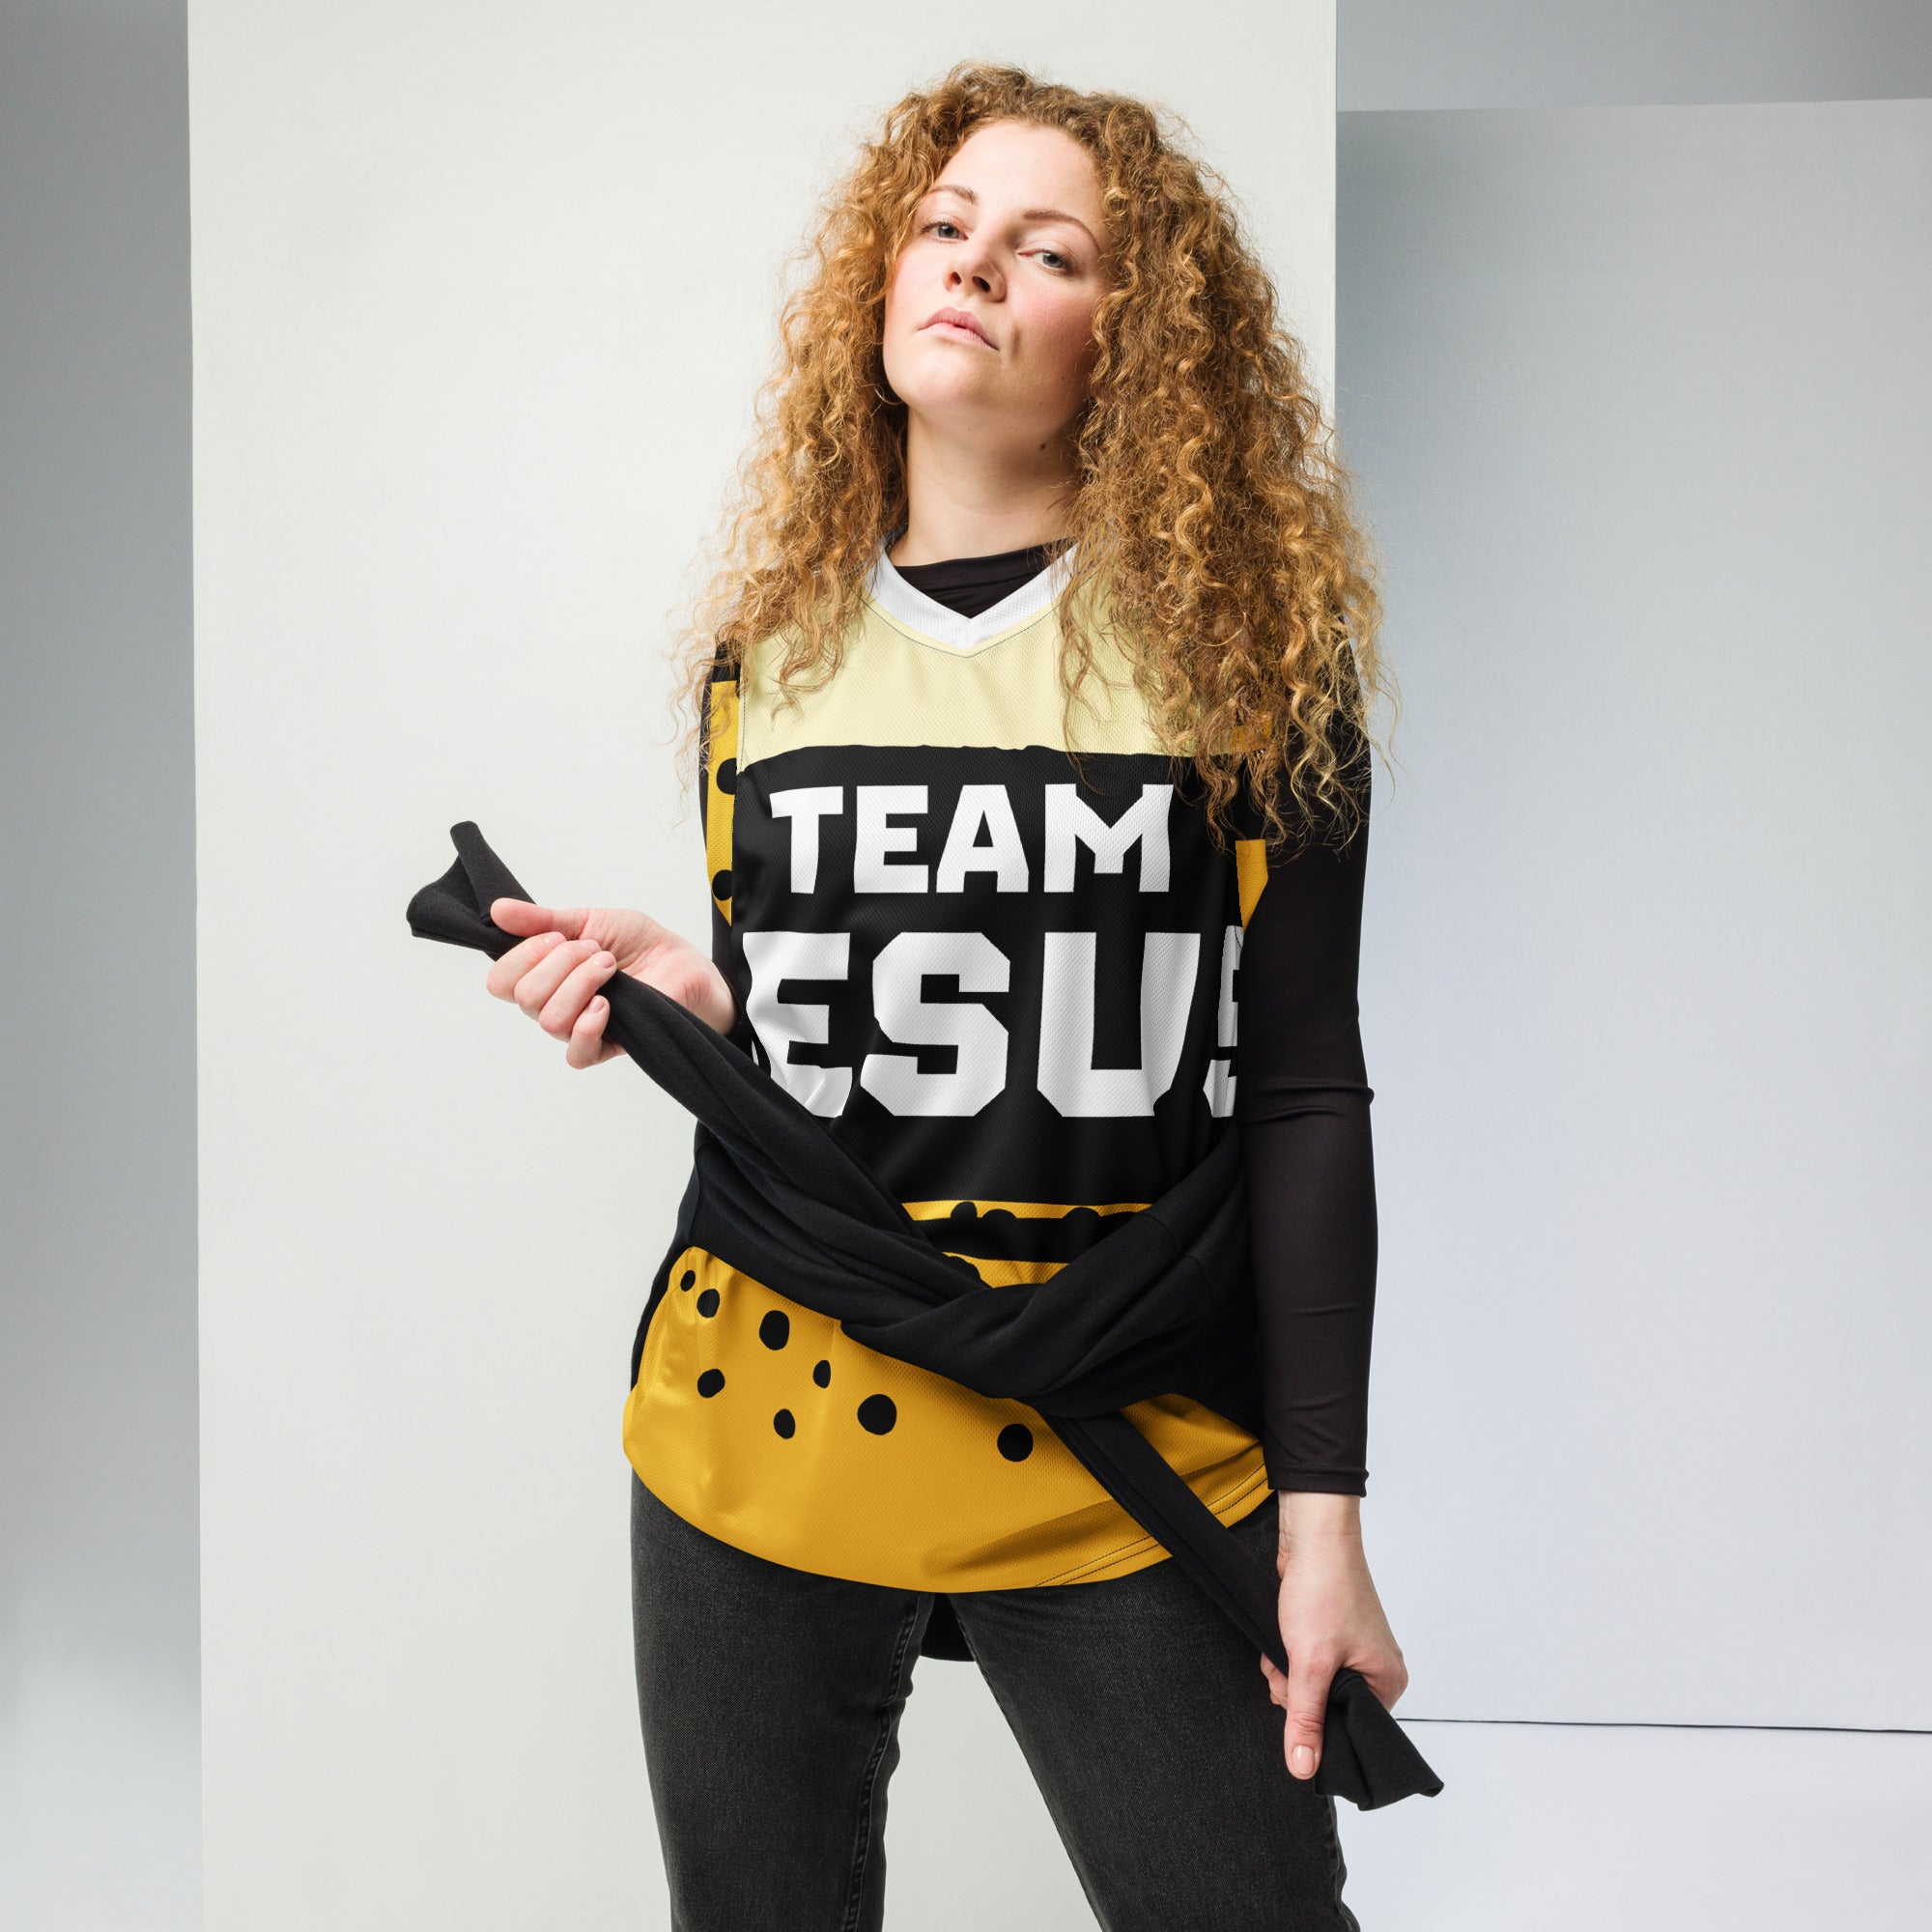 Team Jesus - Recycled unisex basketball jersey